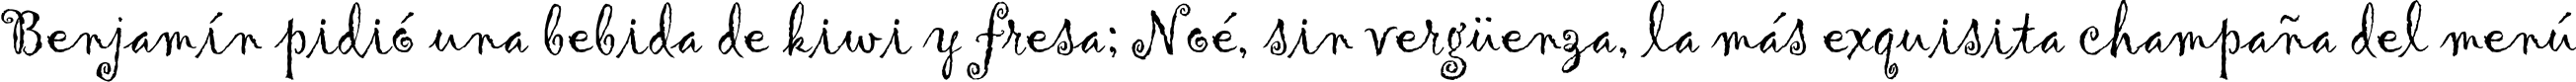 Пример написания шрифтом Gigi текста на испанском